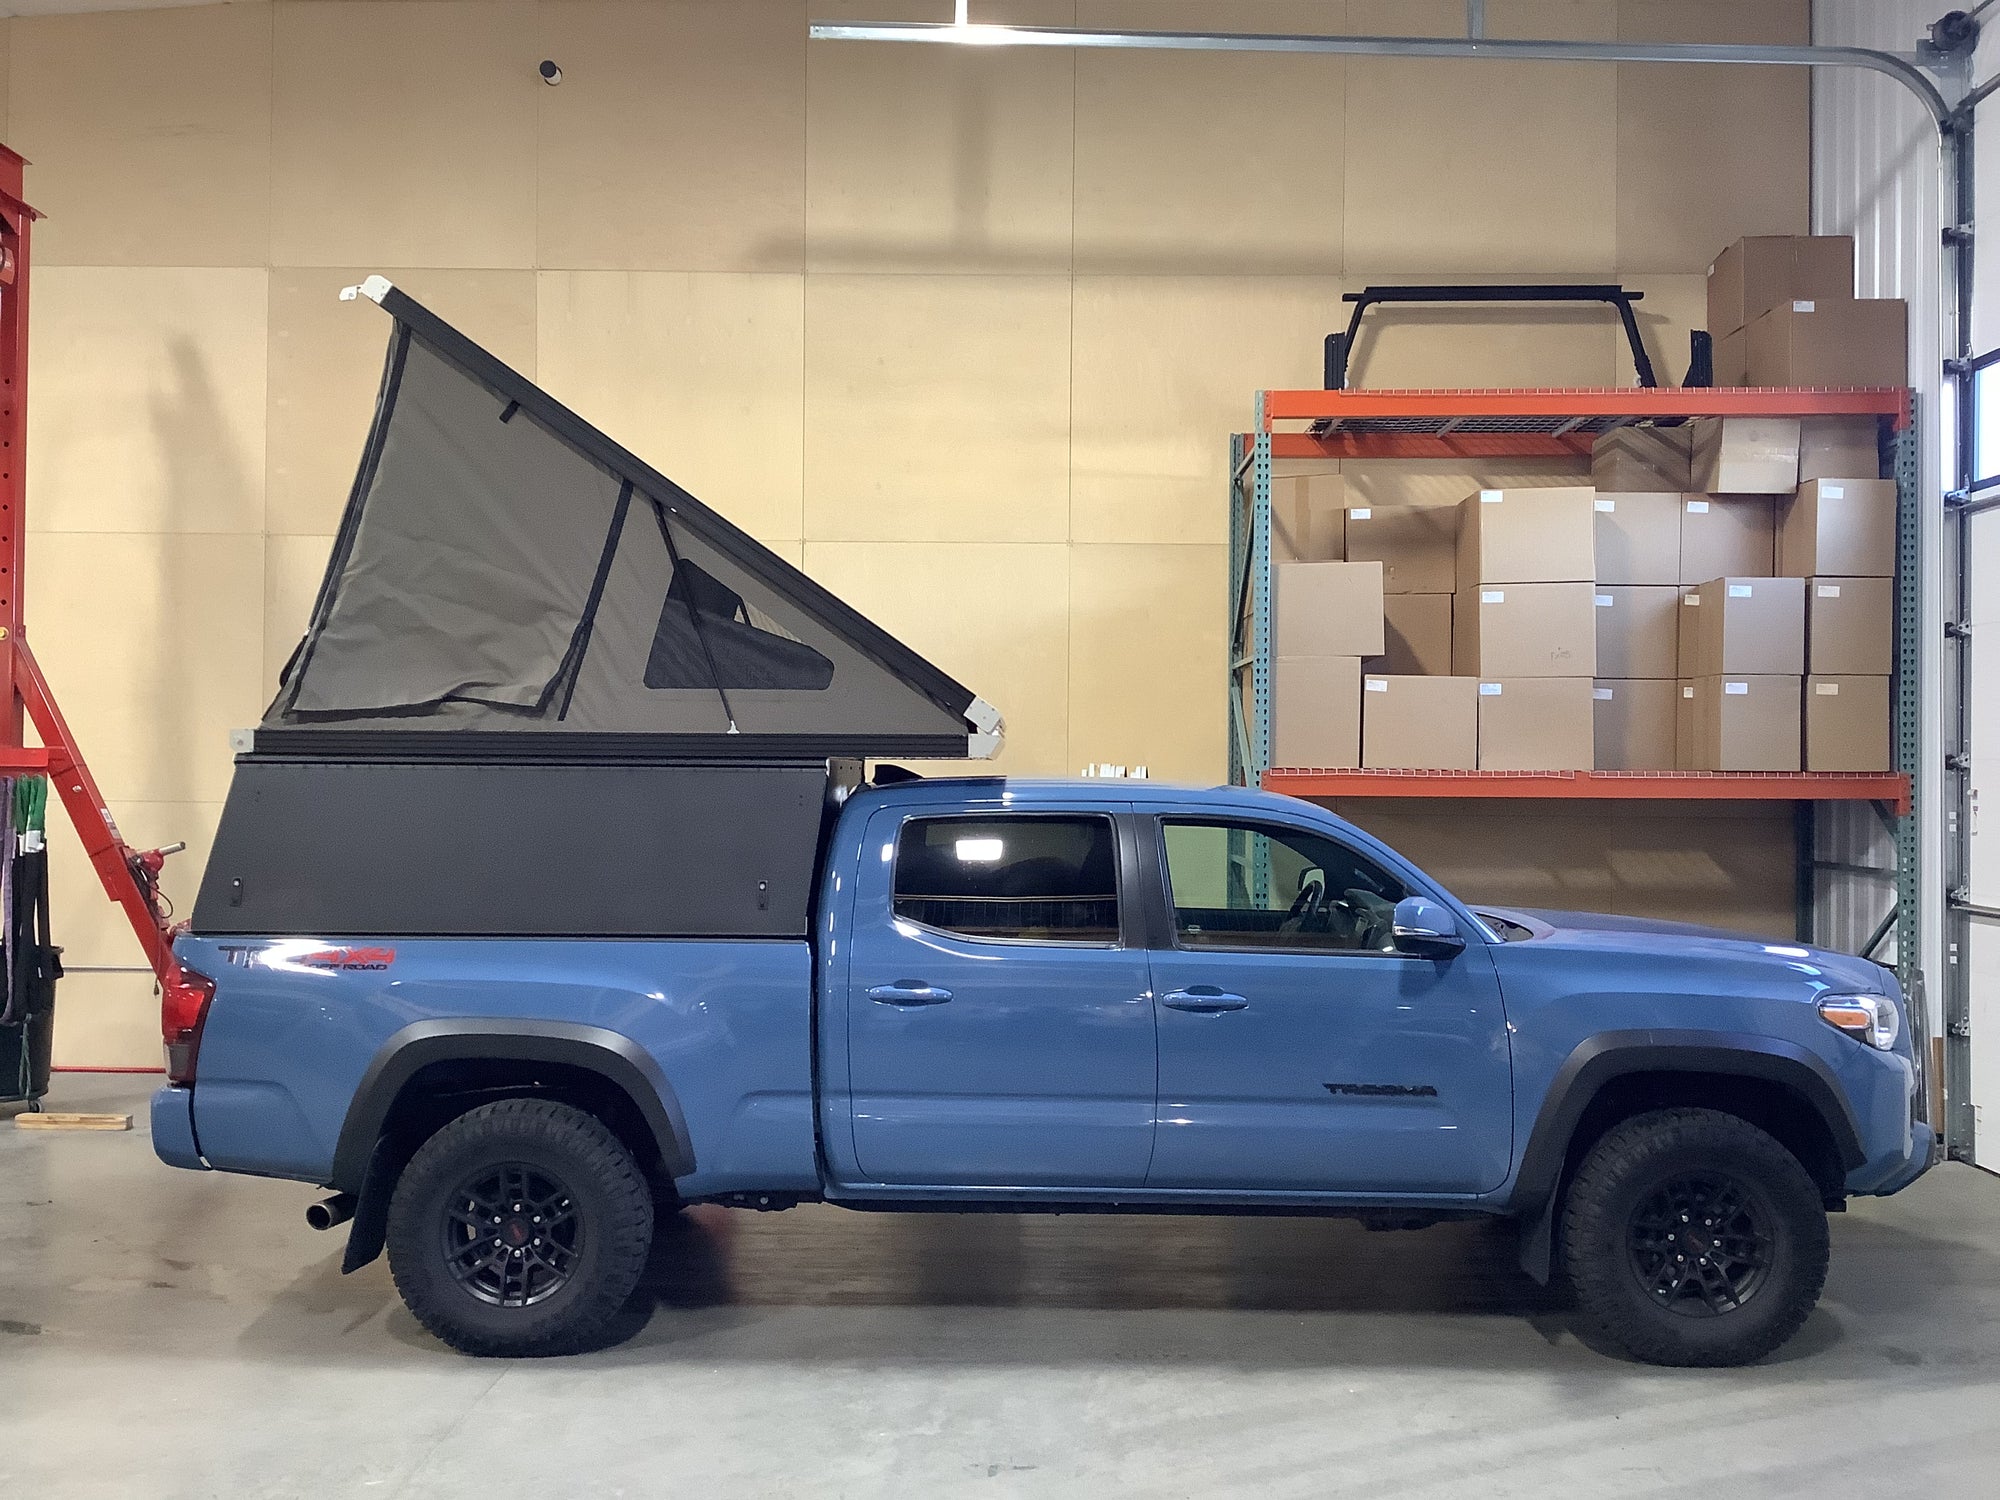 2019 Toyota Tacoma Camper - Build #3616